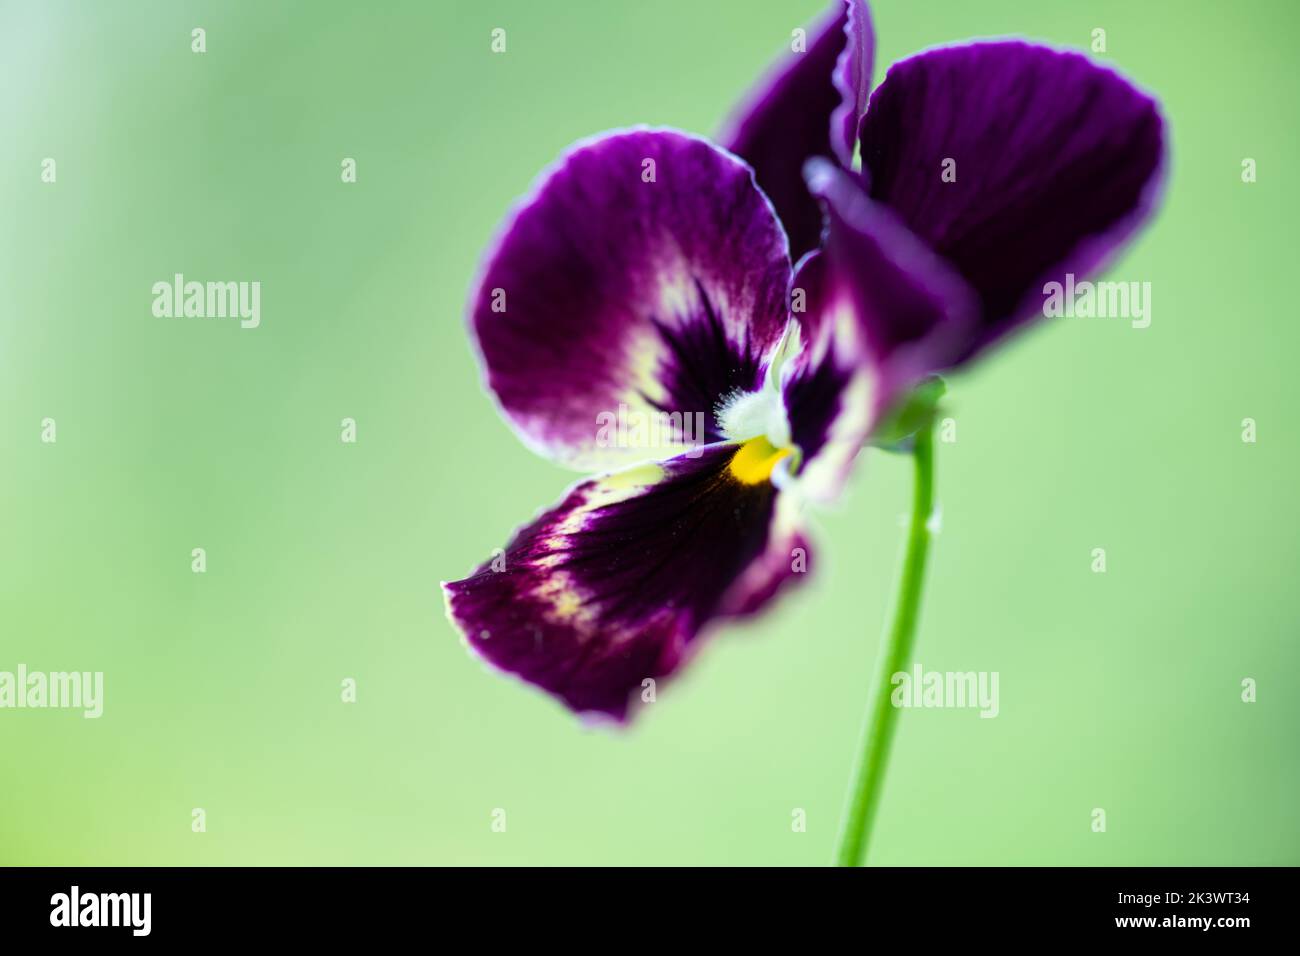 Purple Viola flower blooming in garden, flowering spring flower pansy. Violet viola closeup on blurred green background Stock Photo